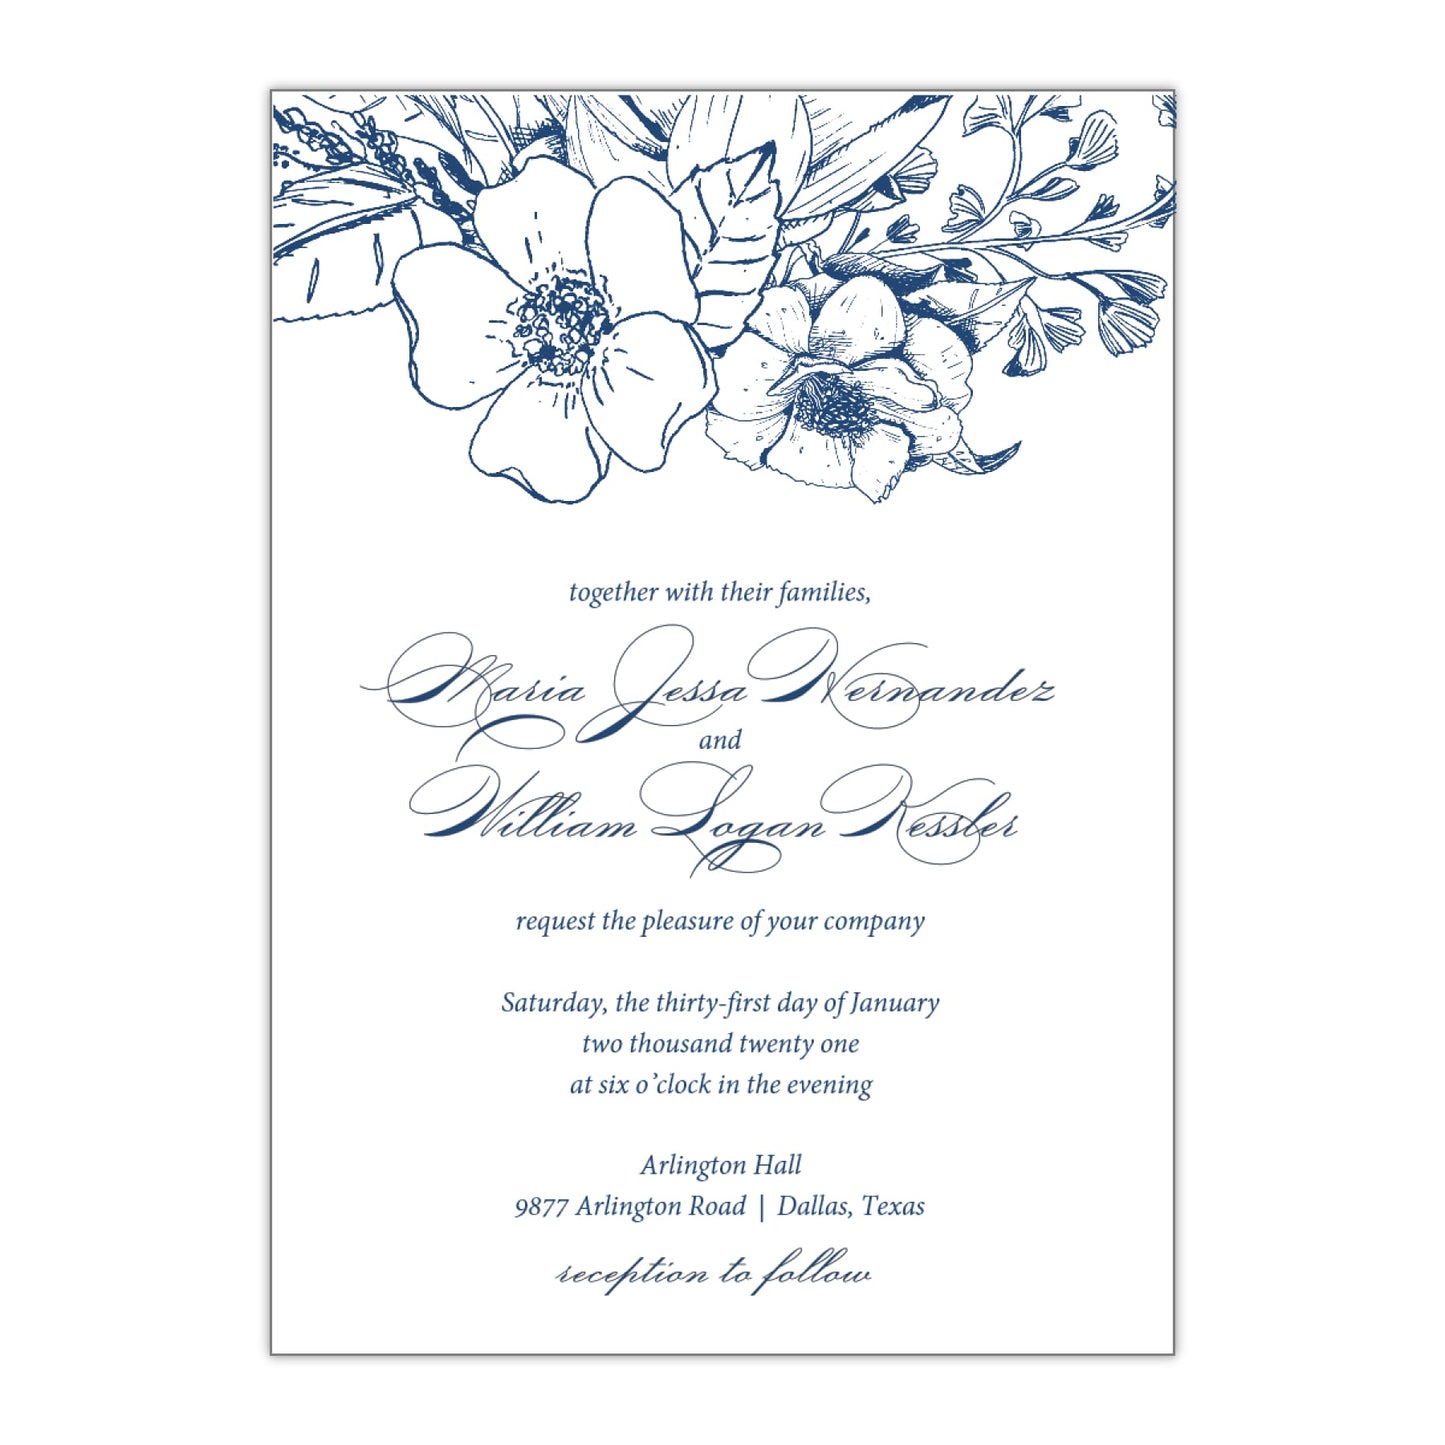 Botanic Florals Wedding Invitation - All That Glitters Invitations